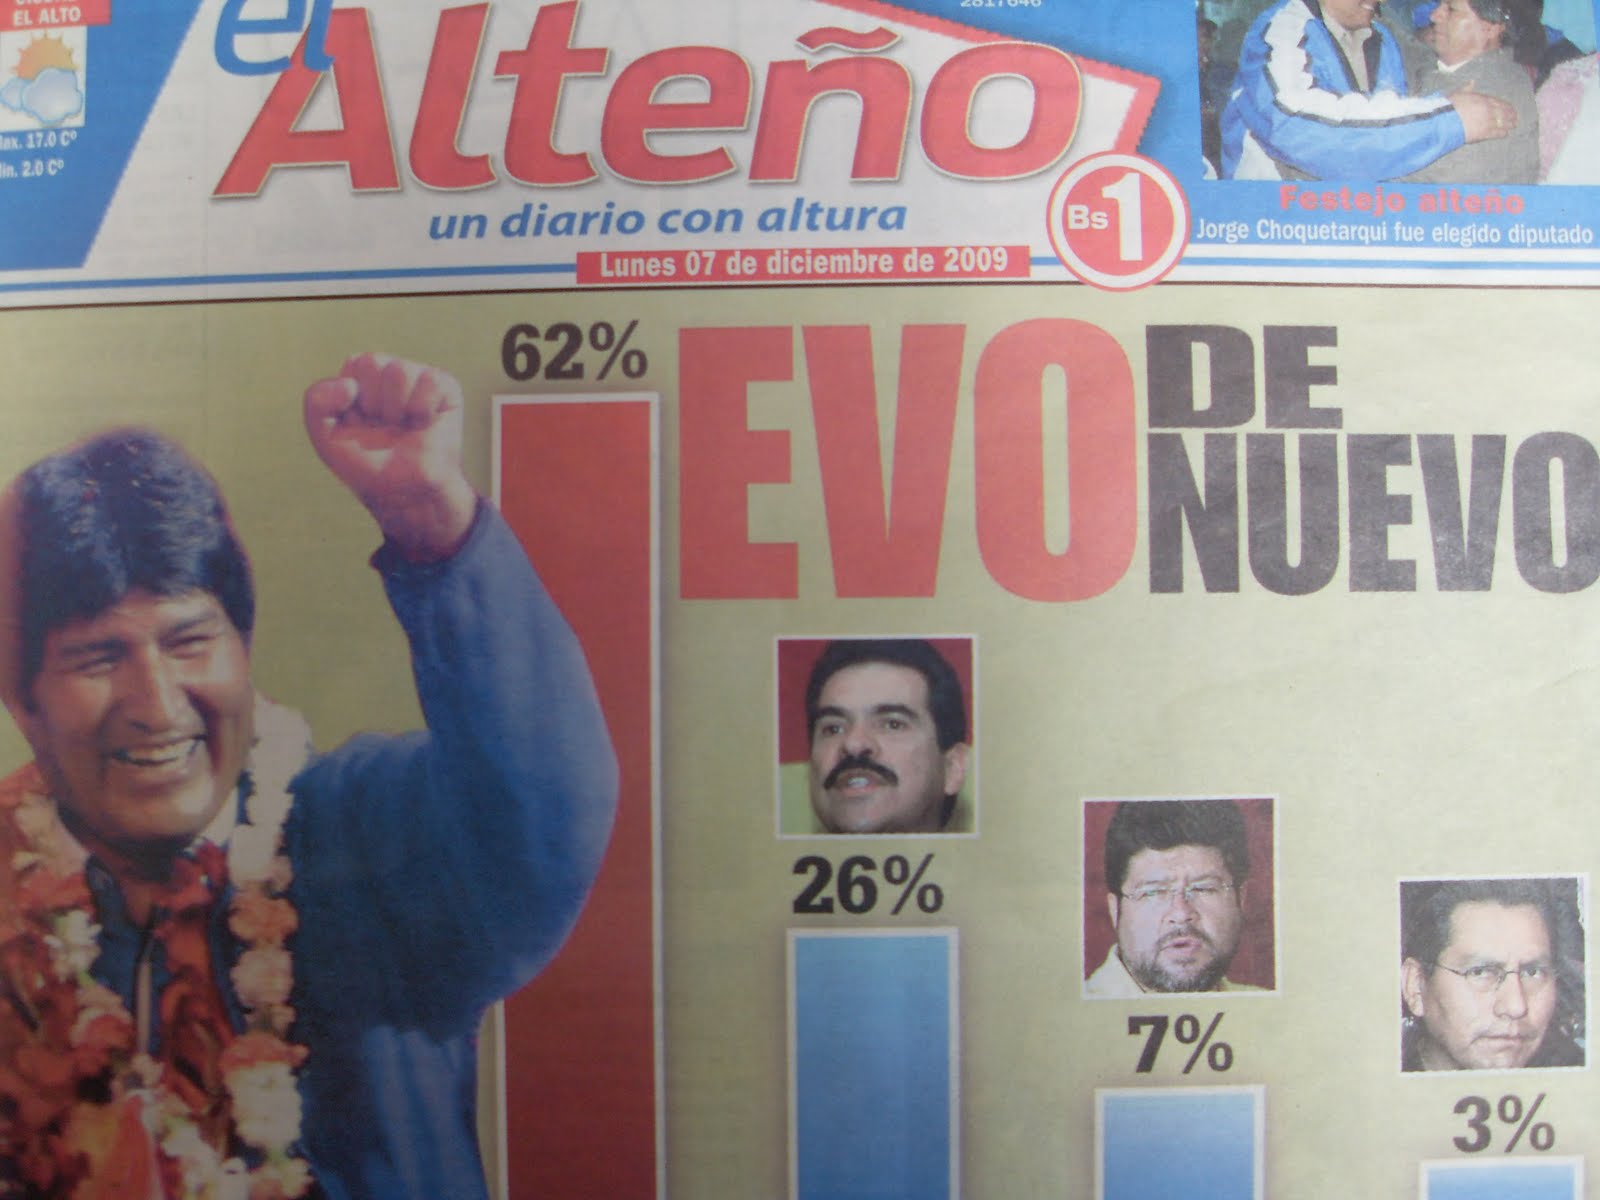 BoliviaPress 19 de diciembre 2005: Primera mirada a las Elecciones Generales del día 18 de diciembre